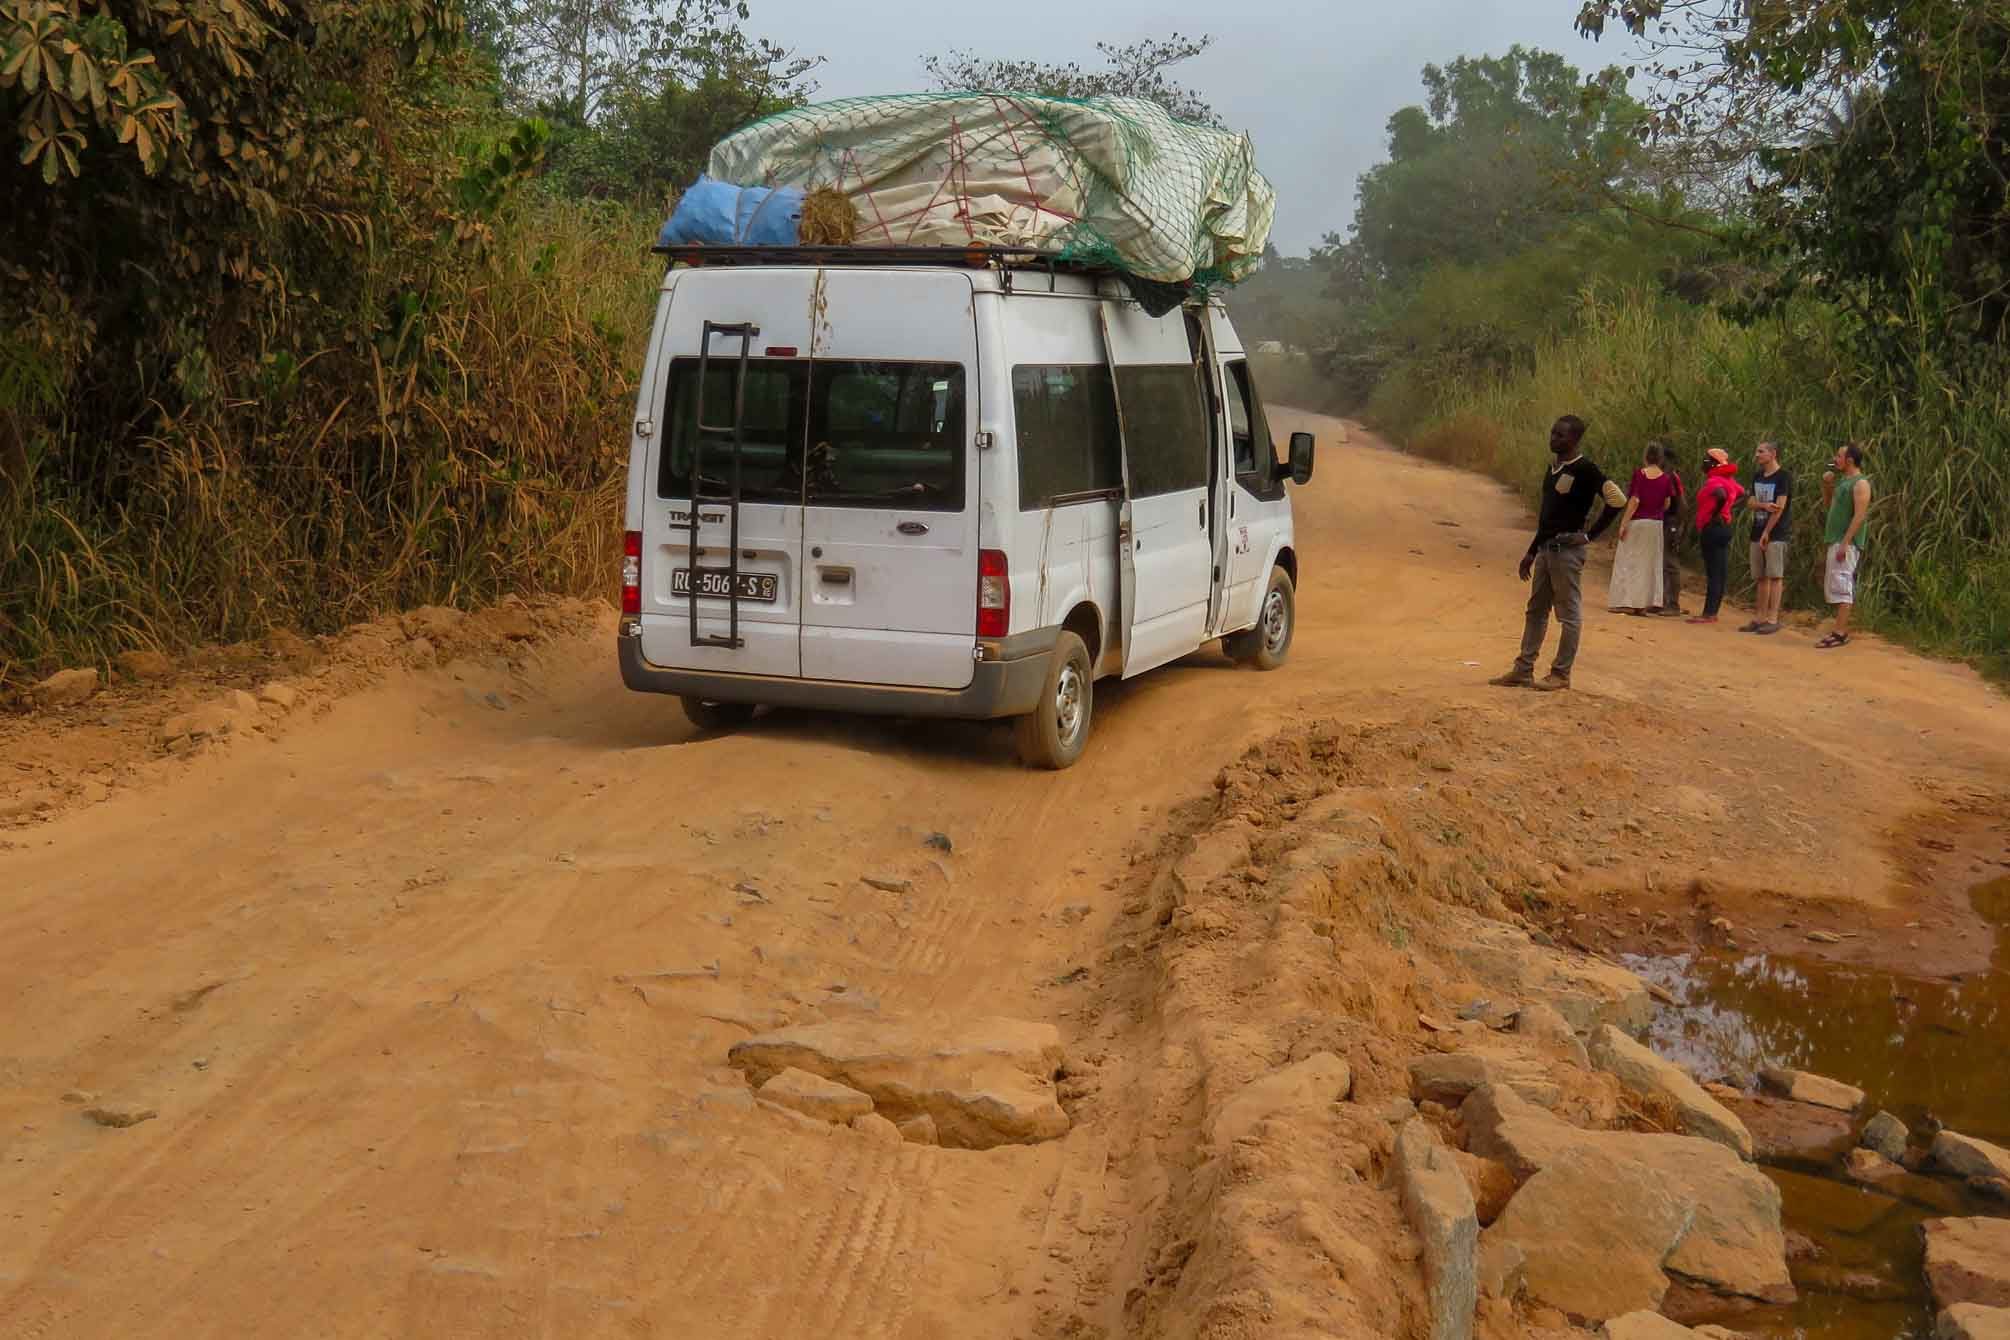 Trip to Massarankissidou in Guinea